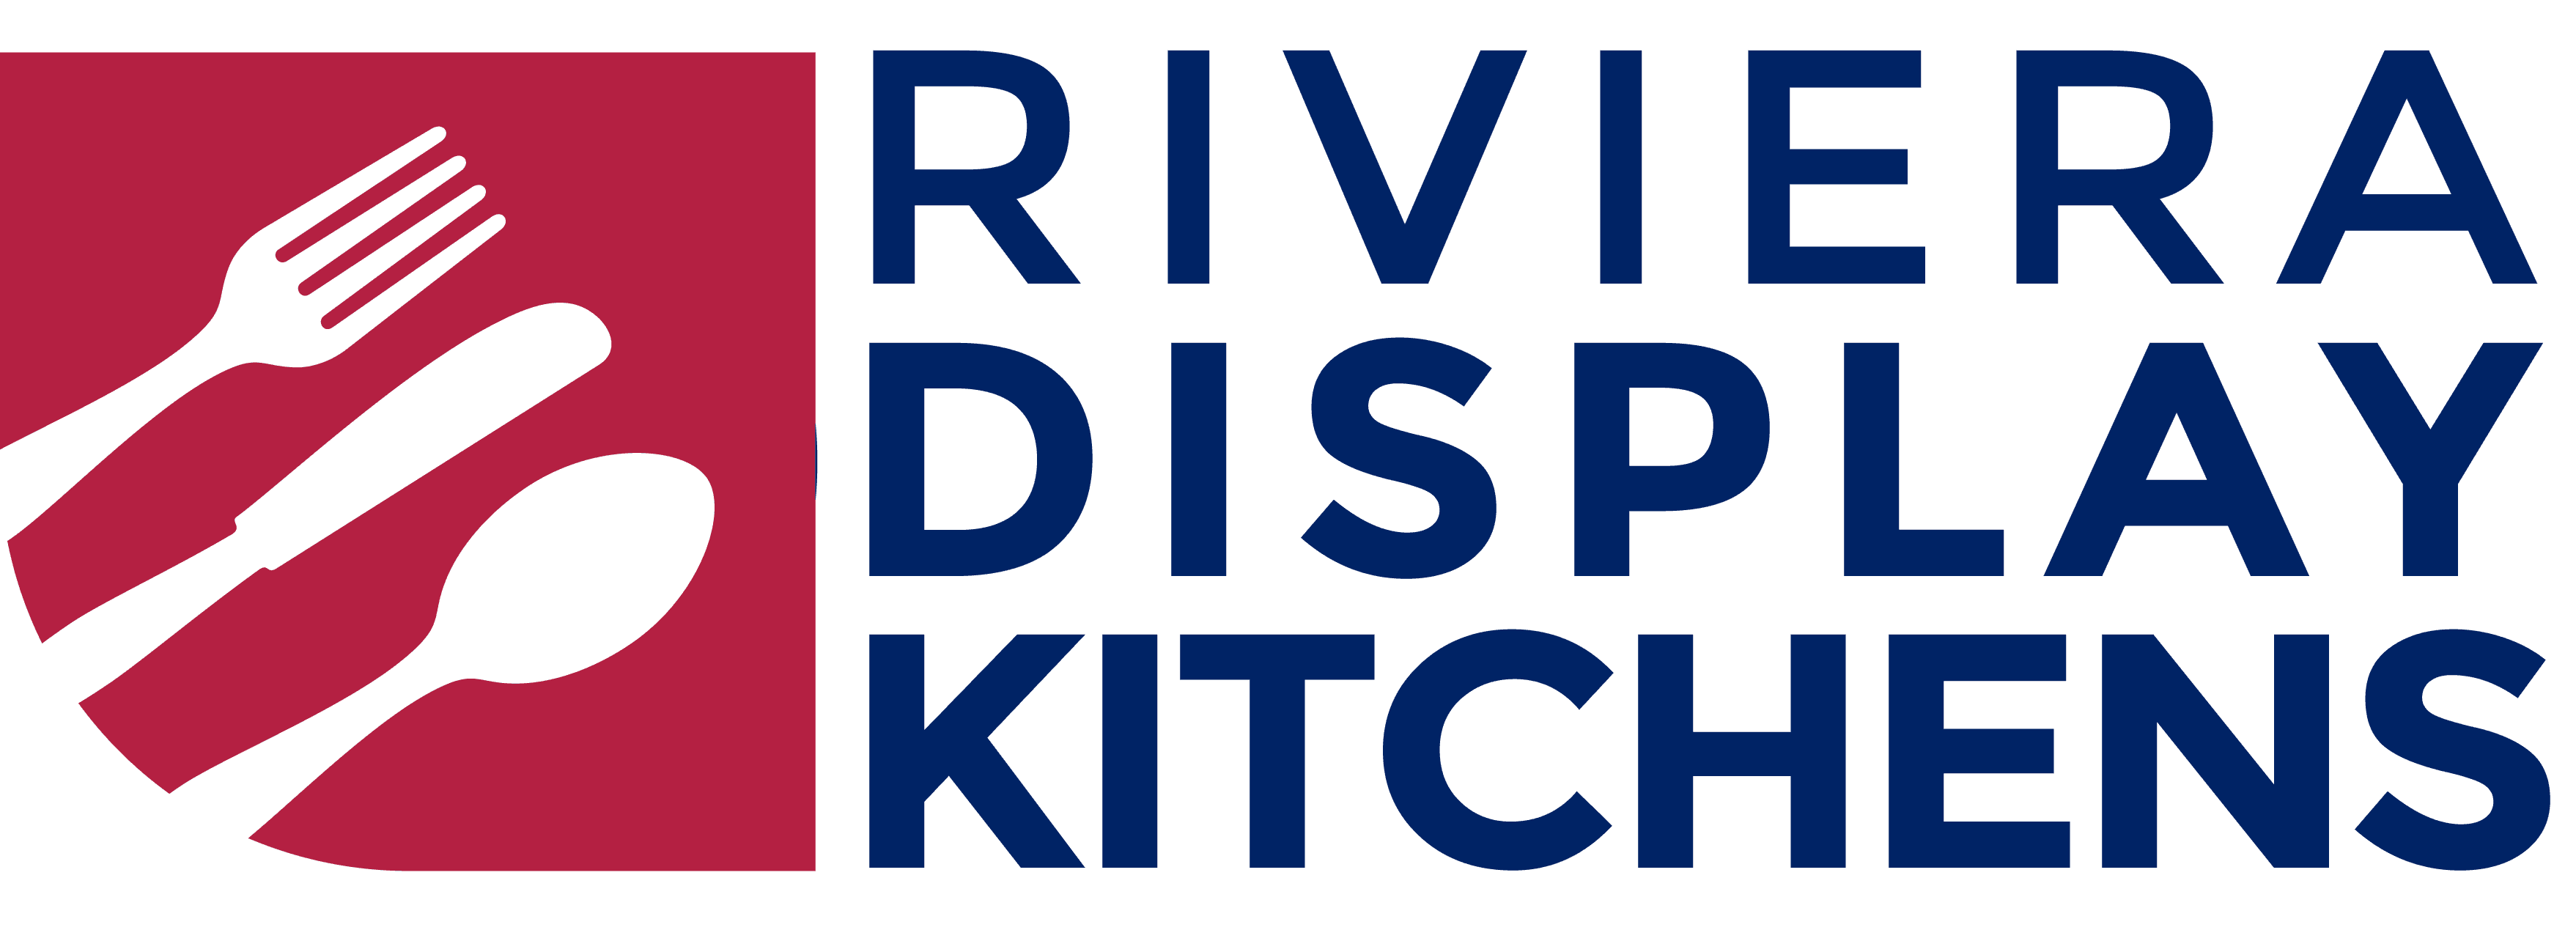 riviera display kitchens logo